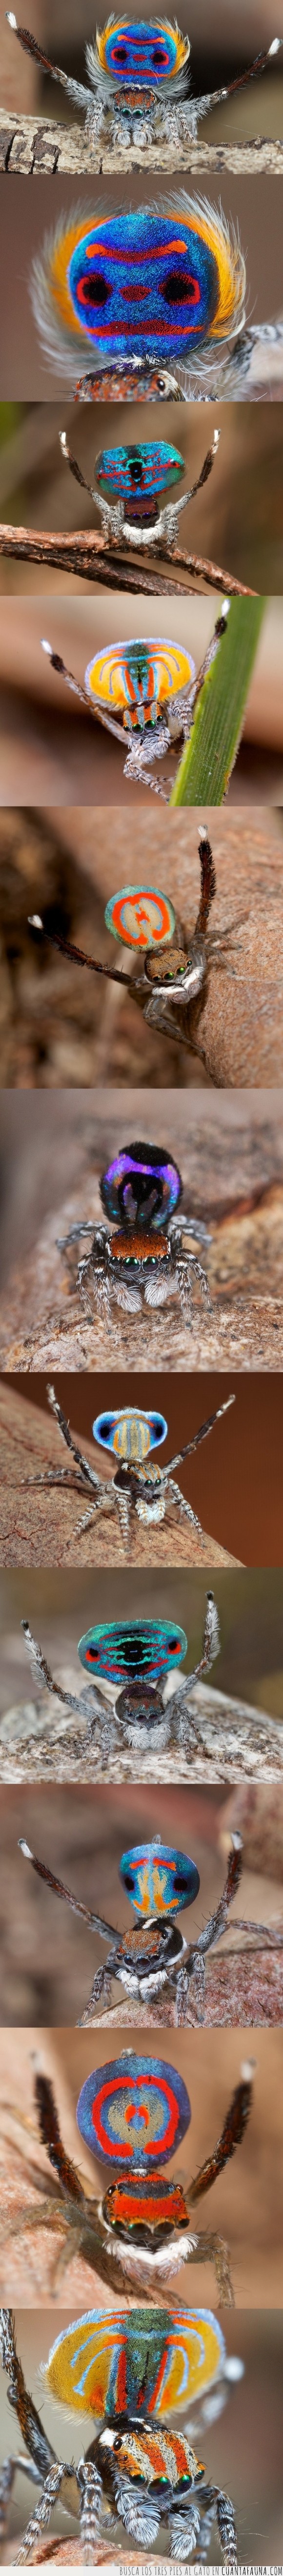 Araña Pavo Real,Arañas,Australia,Danza para atraer a su pareja,Hermosa,Muy pequeña